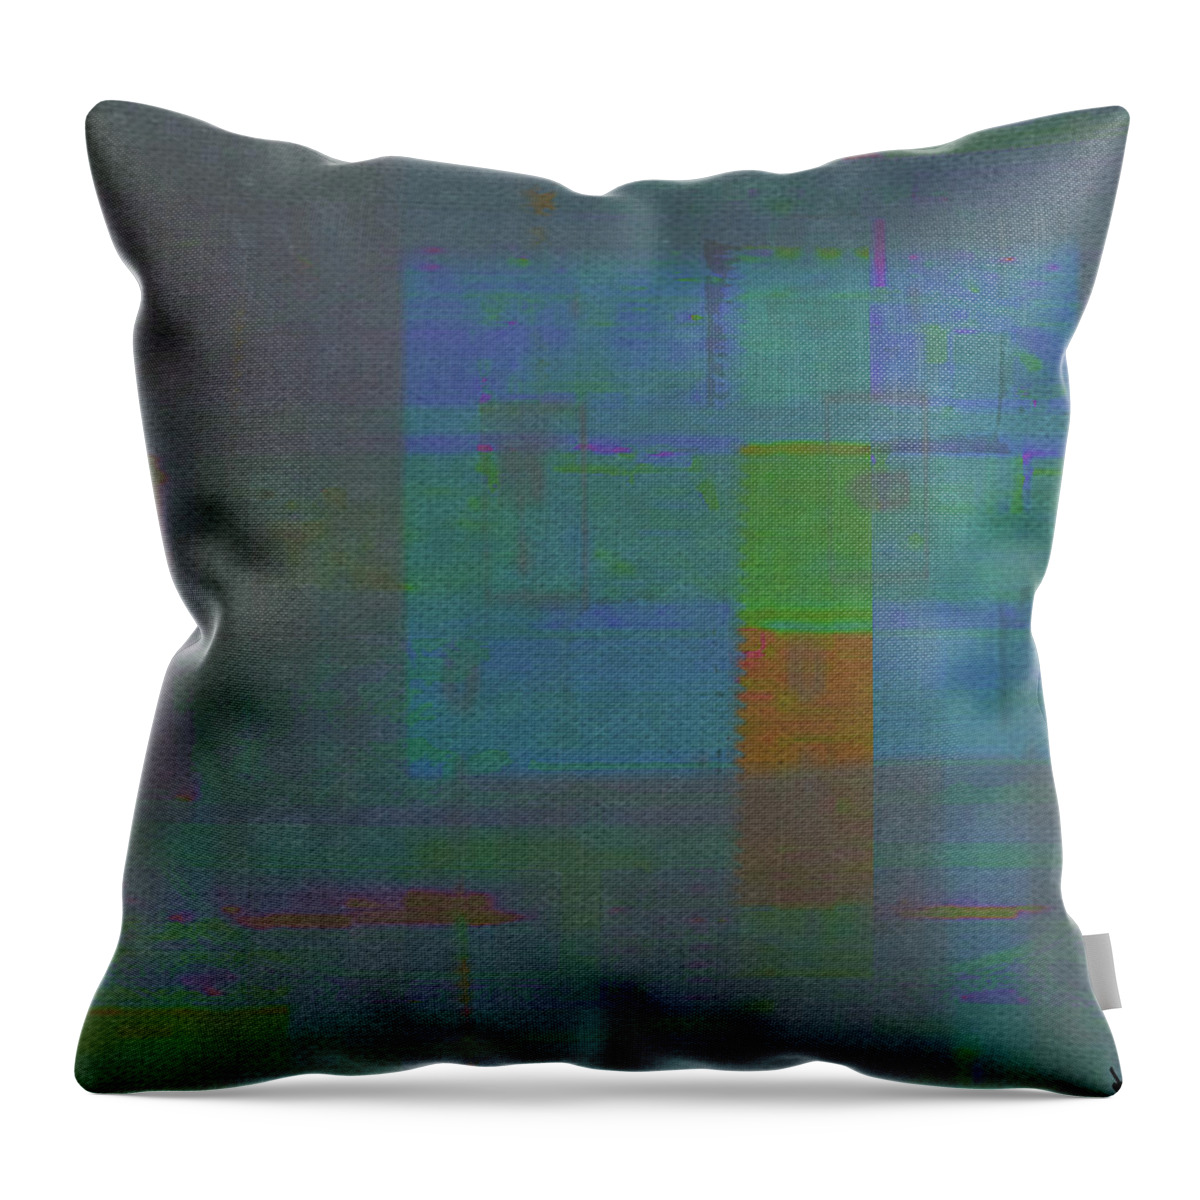 Abstract Throw Pillow featuring the digital art Just Beyond The Glass by Ken Walker